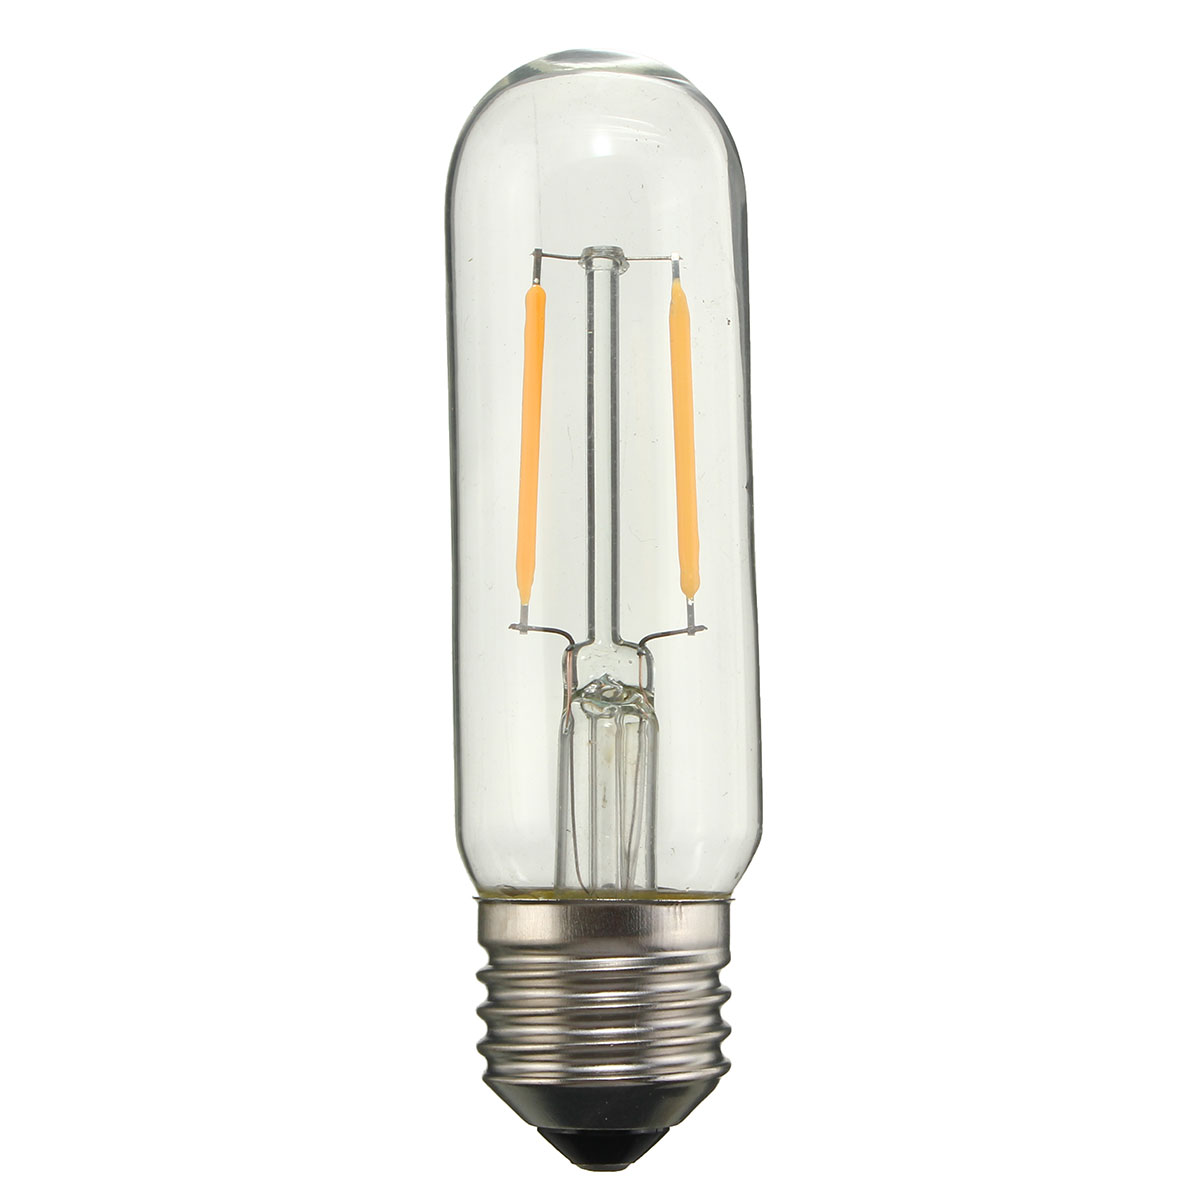 Dimmable-T10-E27-2W-COB-Pure-White-Warm-White-200Lumens-Retro-Edison-Light-Bulb-AC110V-AC220V-1070533